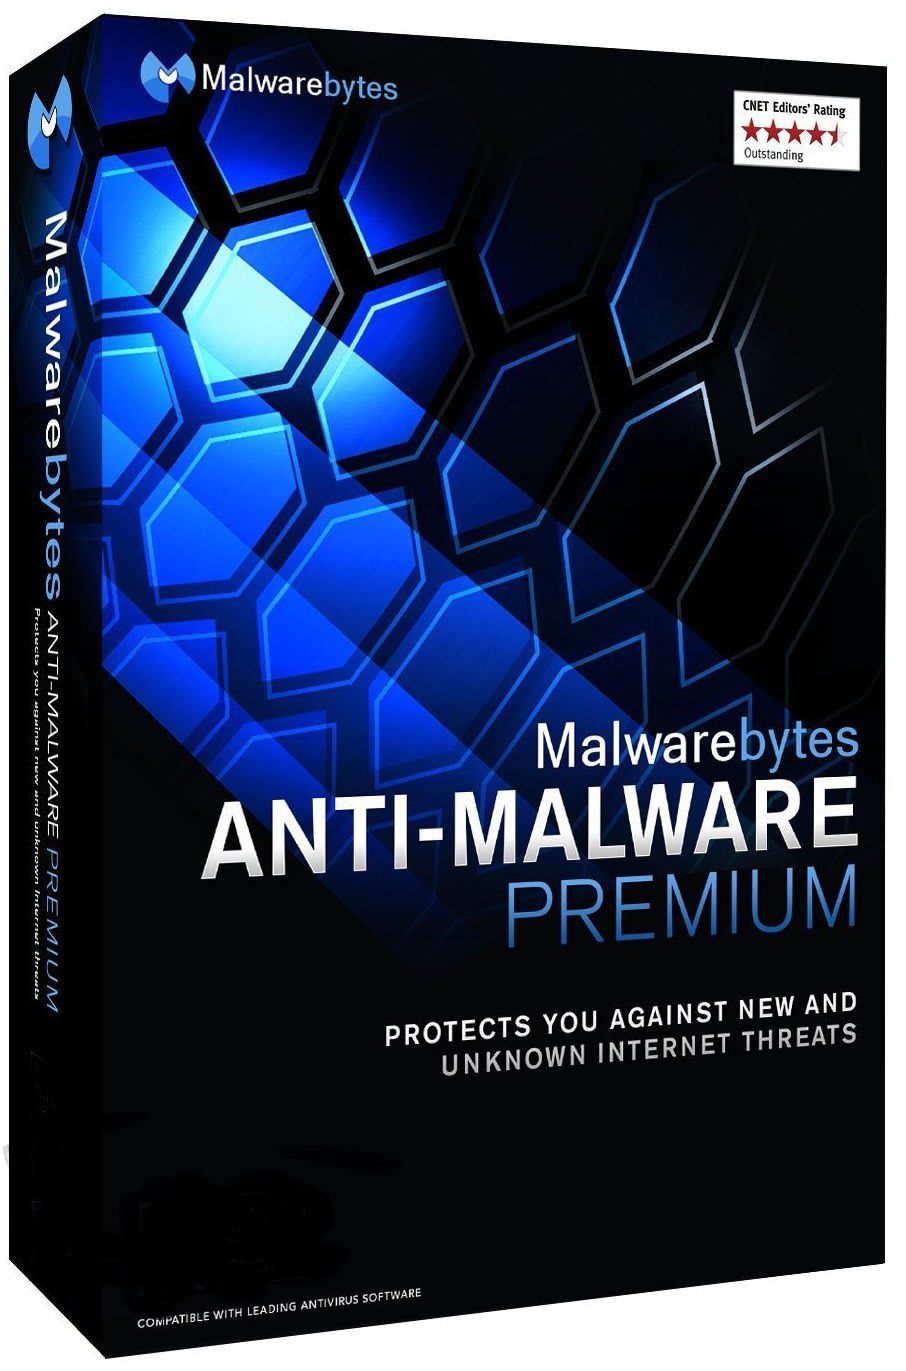 Malwarebytes Anti-Malware Premium crack